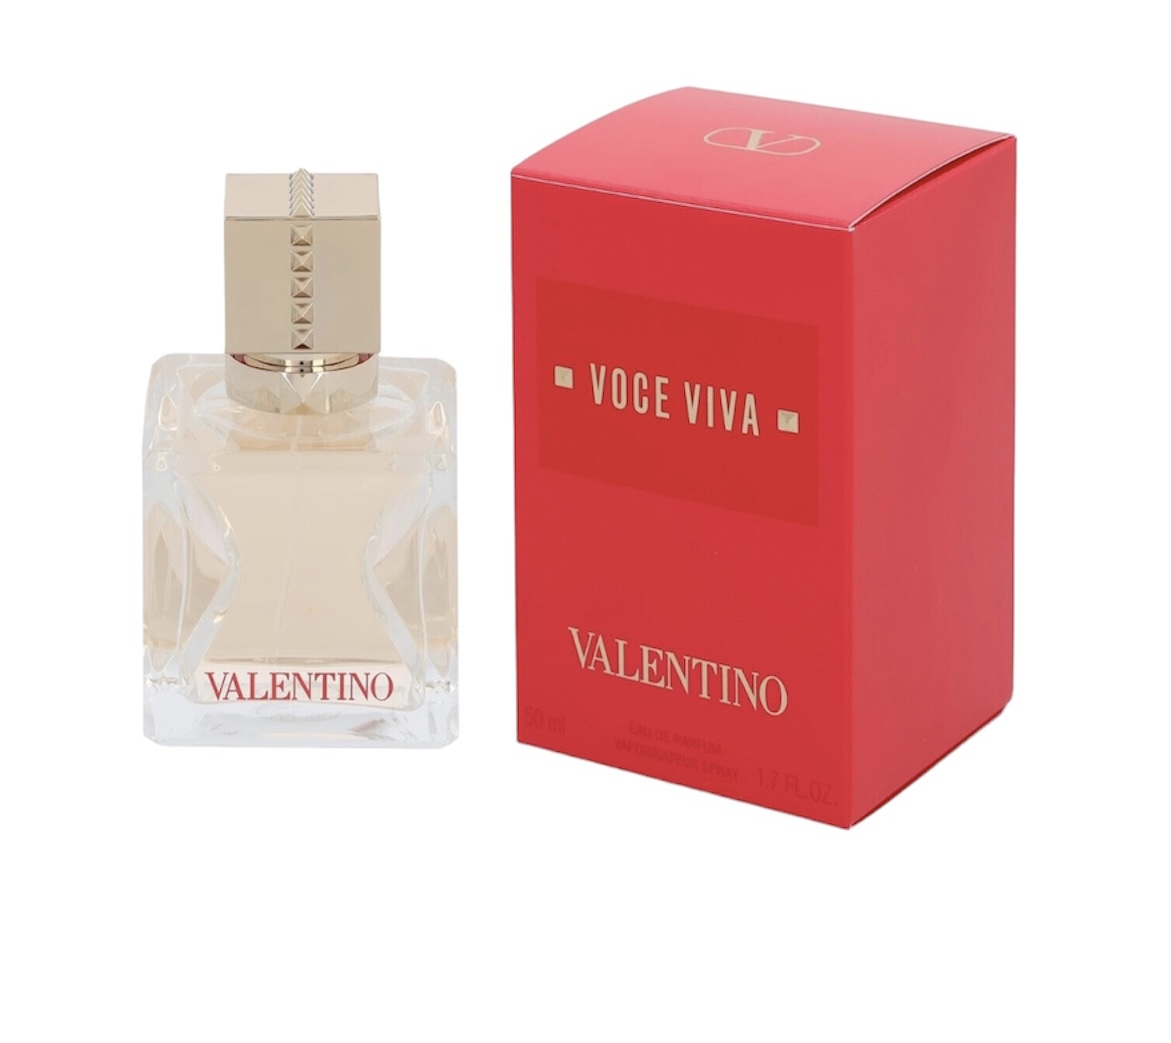  Valentino Voce Viva Eau de Parfum 50ml 